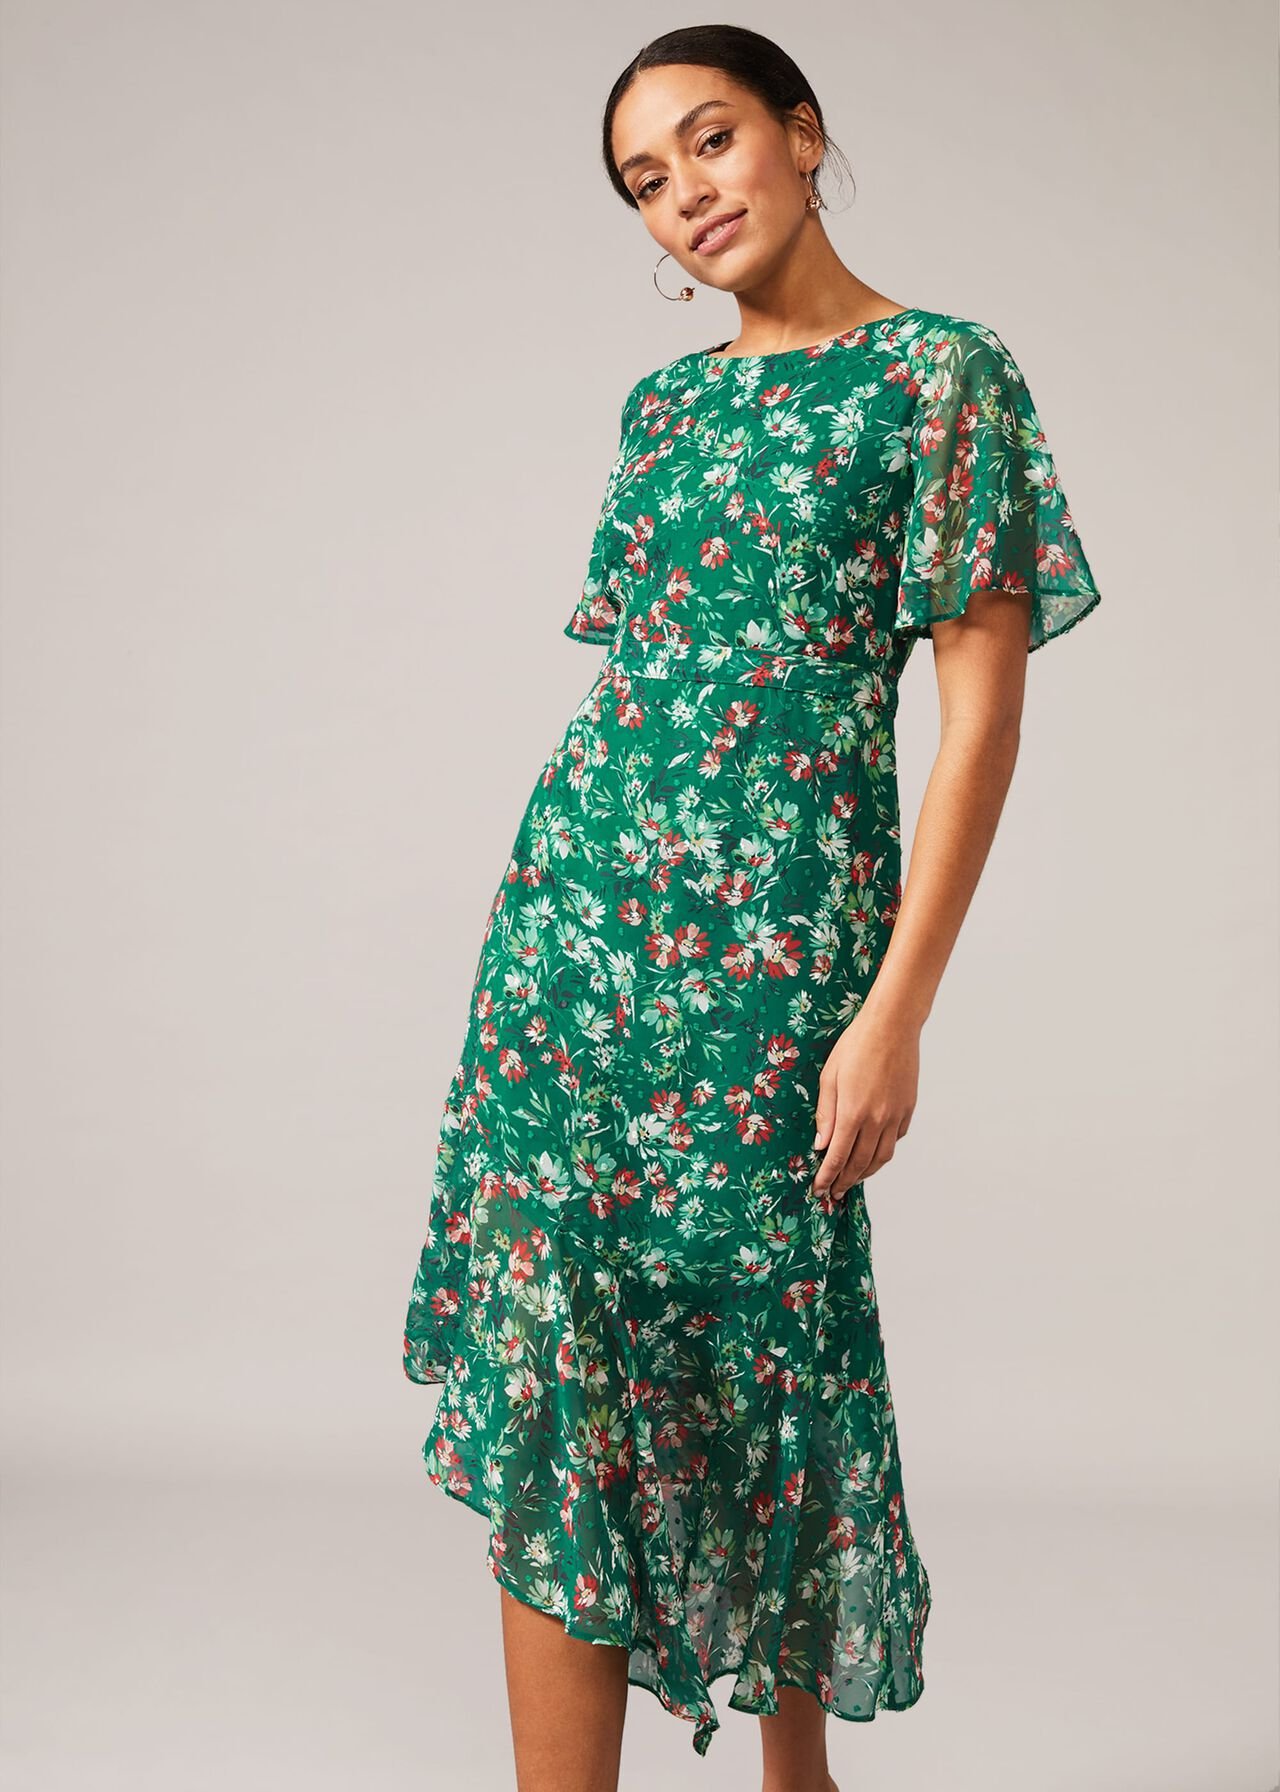 Coralee Textured Floral Dress